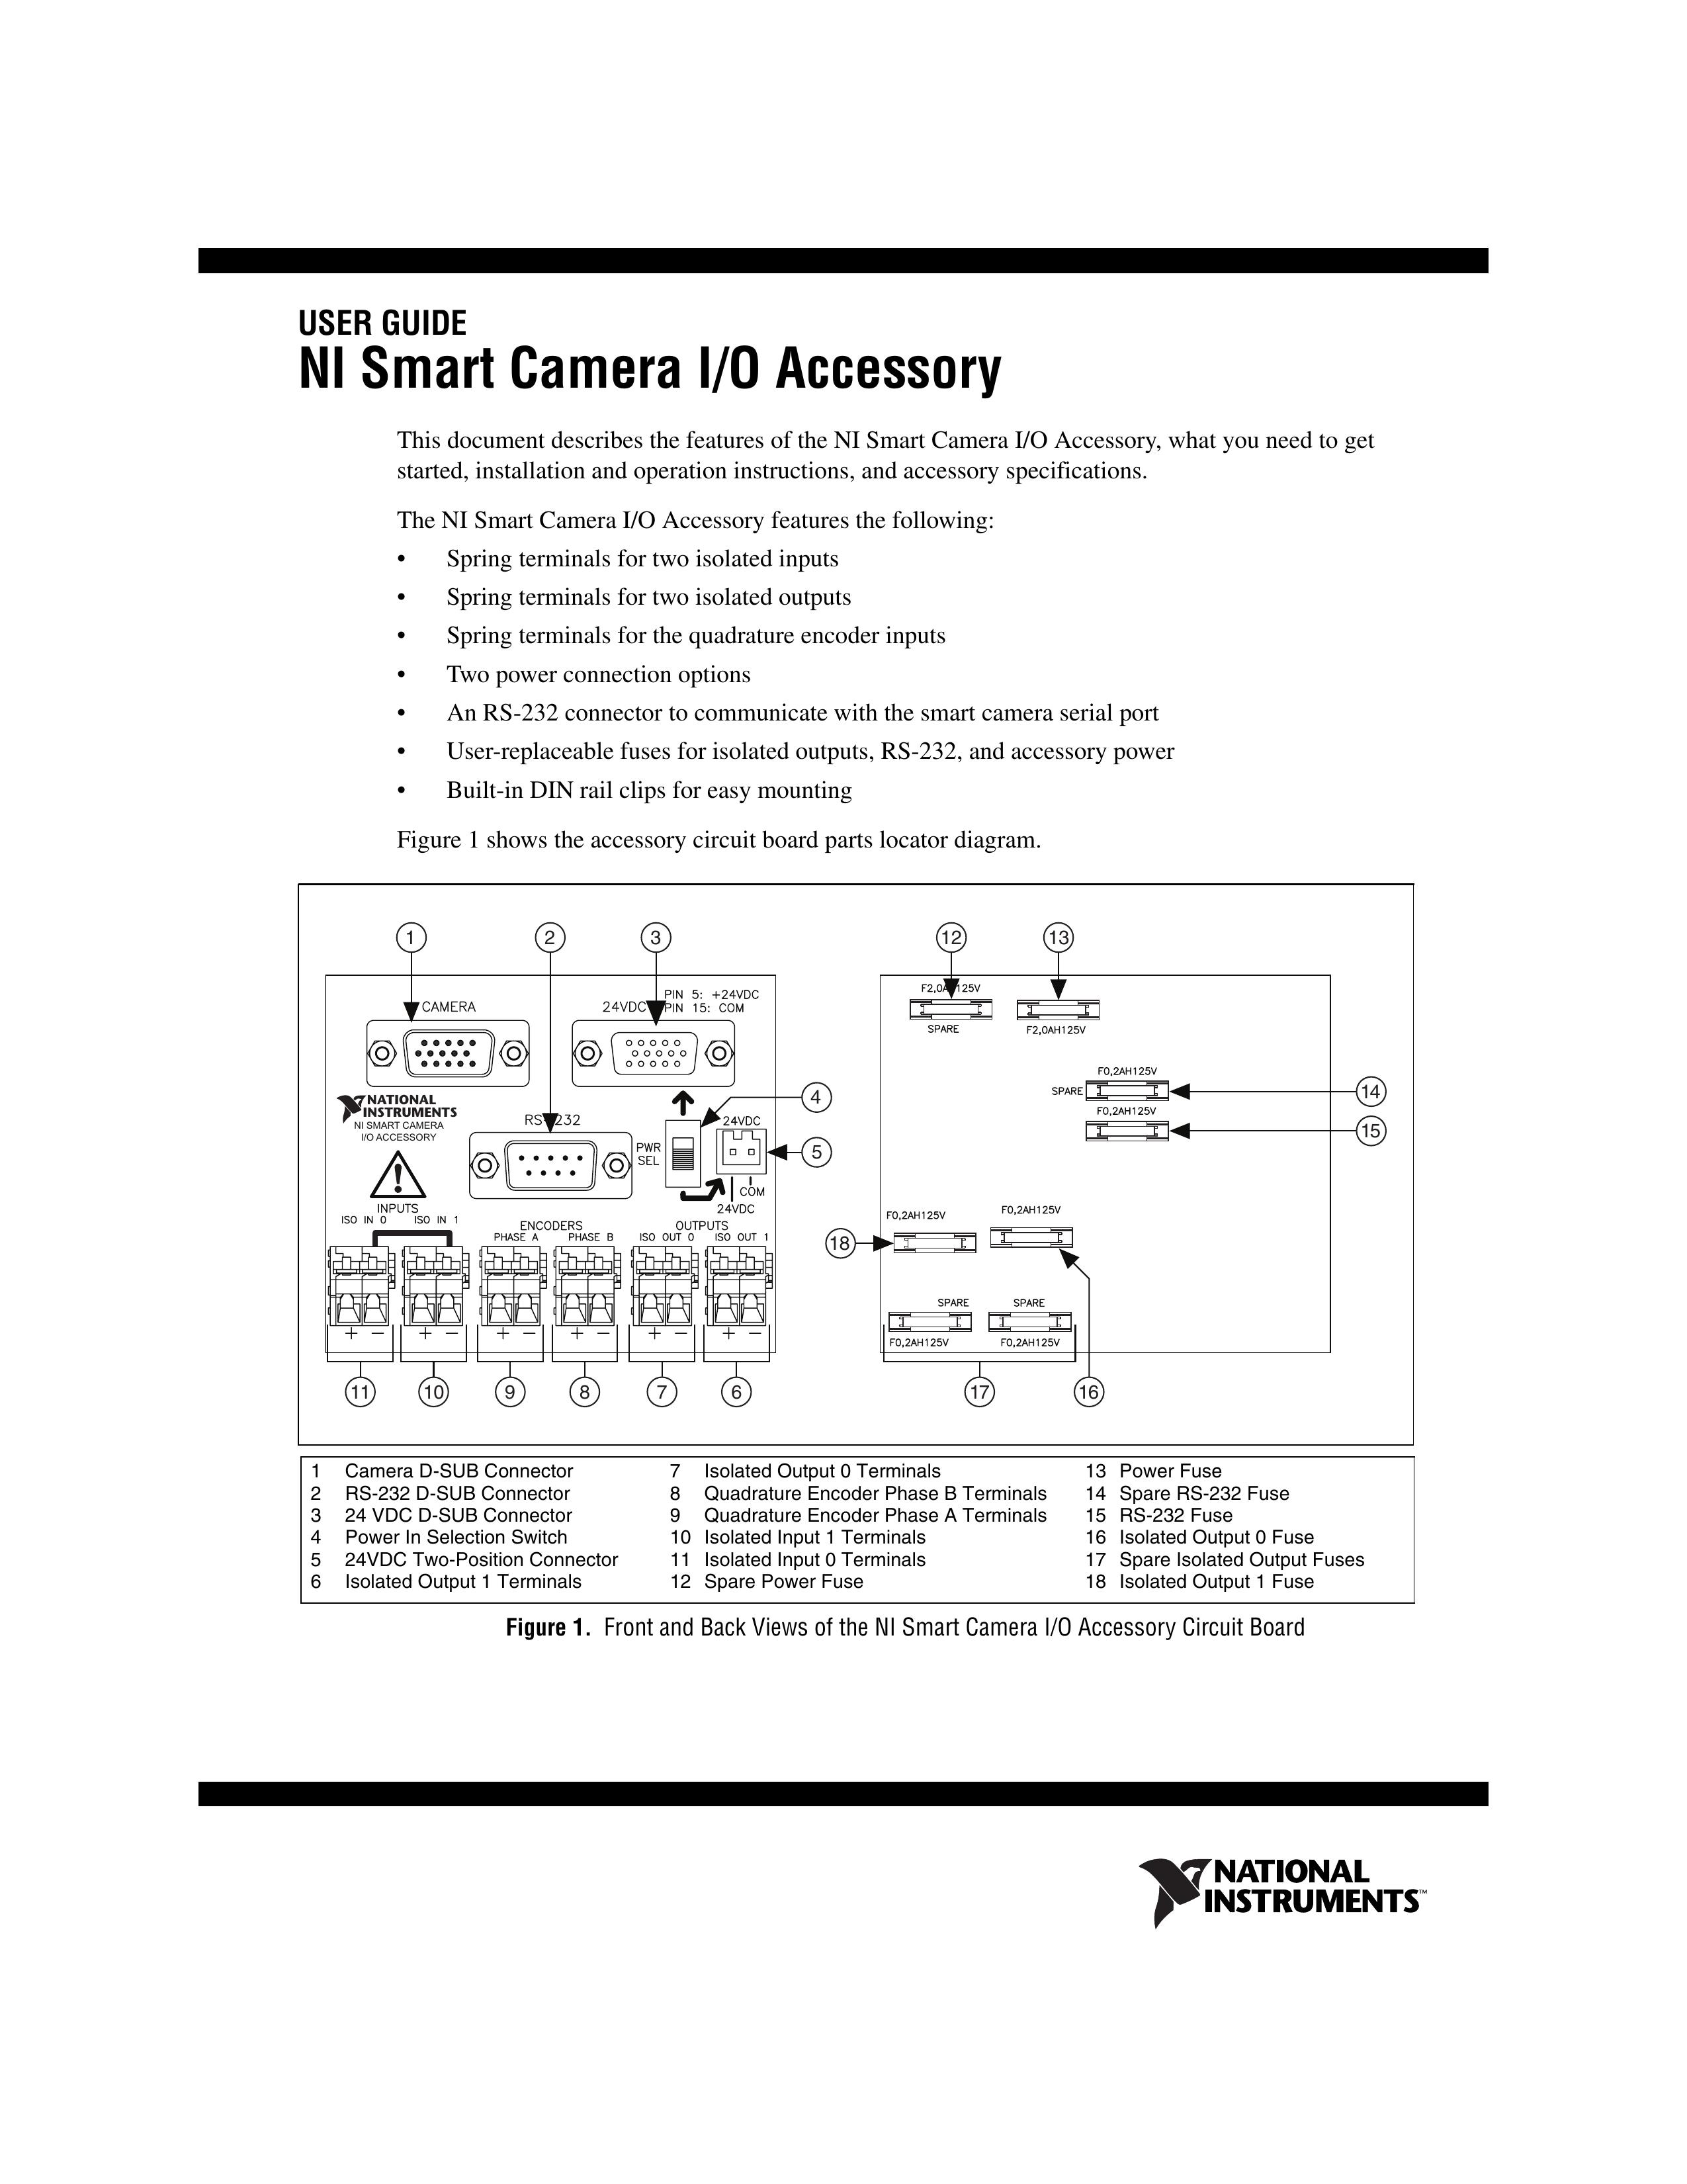 National Instruments Smart Camera Digital Camera User Manual